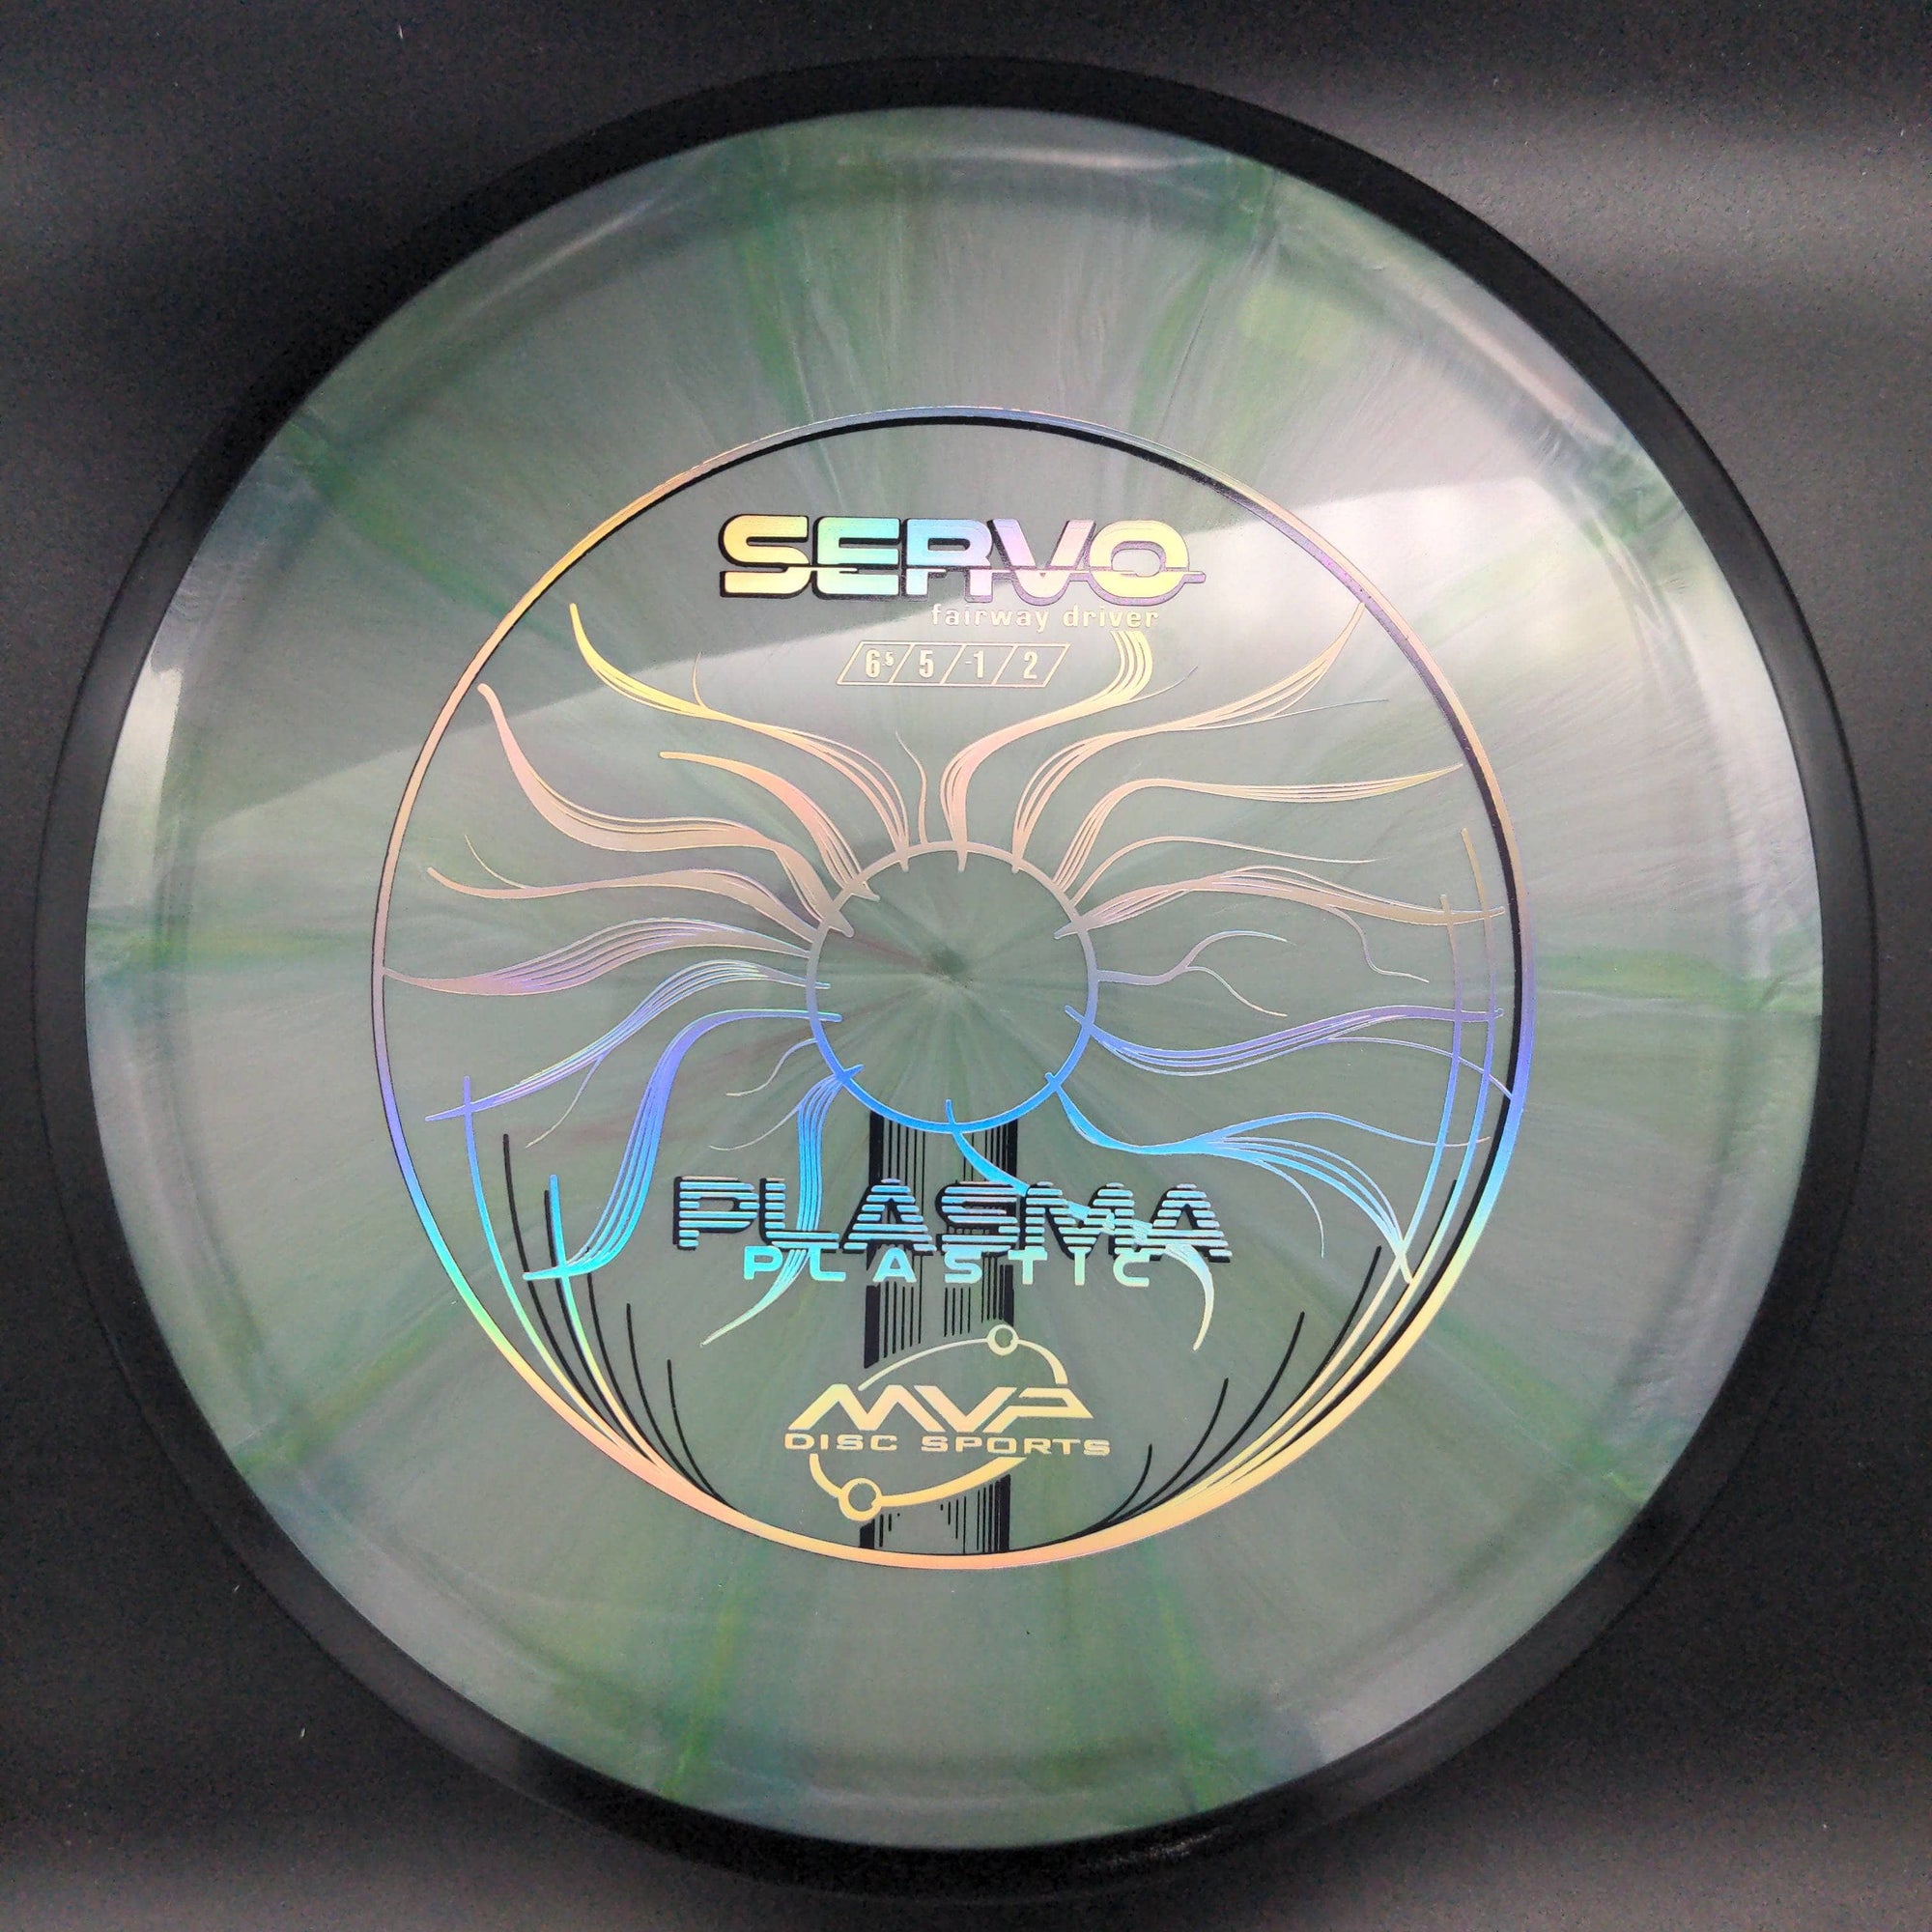 MVP Fairway Driver Grey/Green 173g Servo, Plasma Plastic